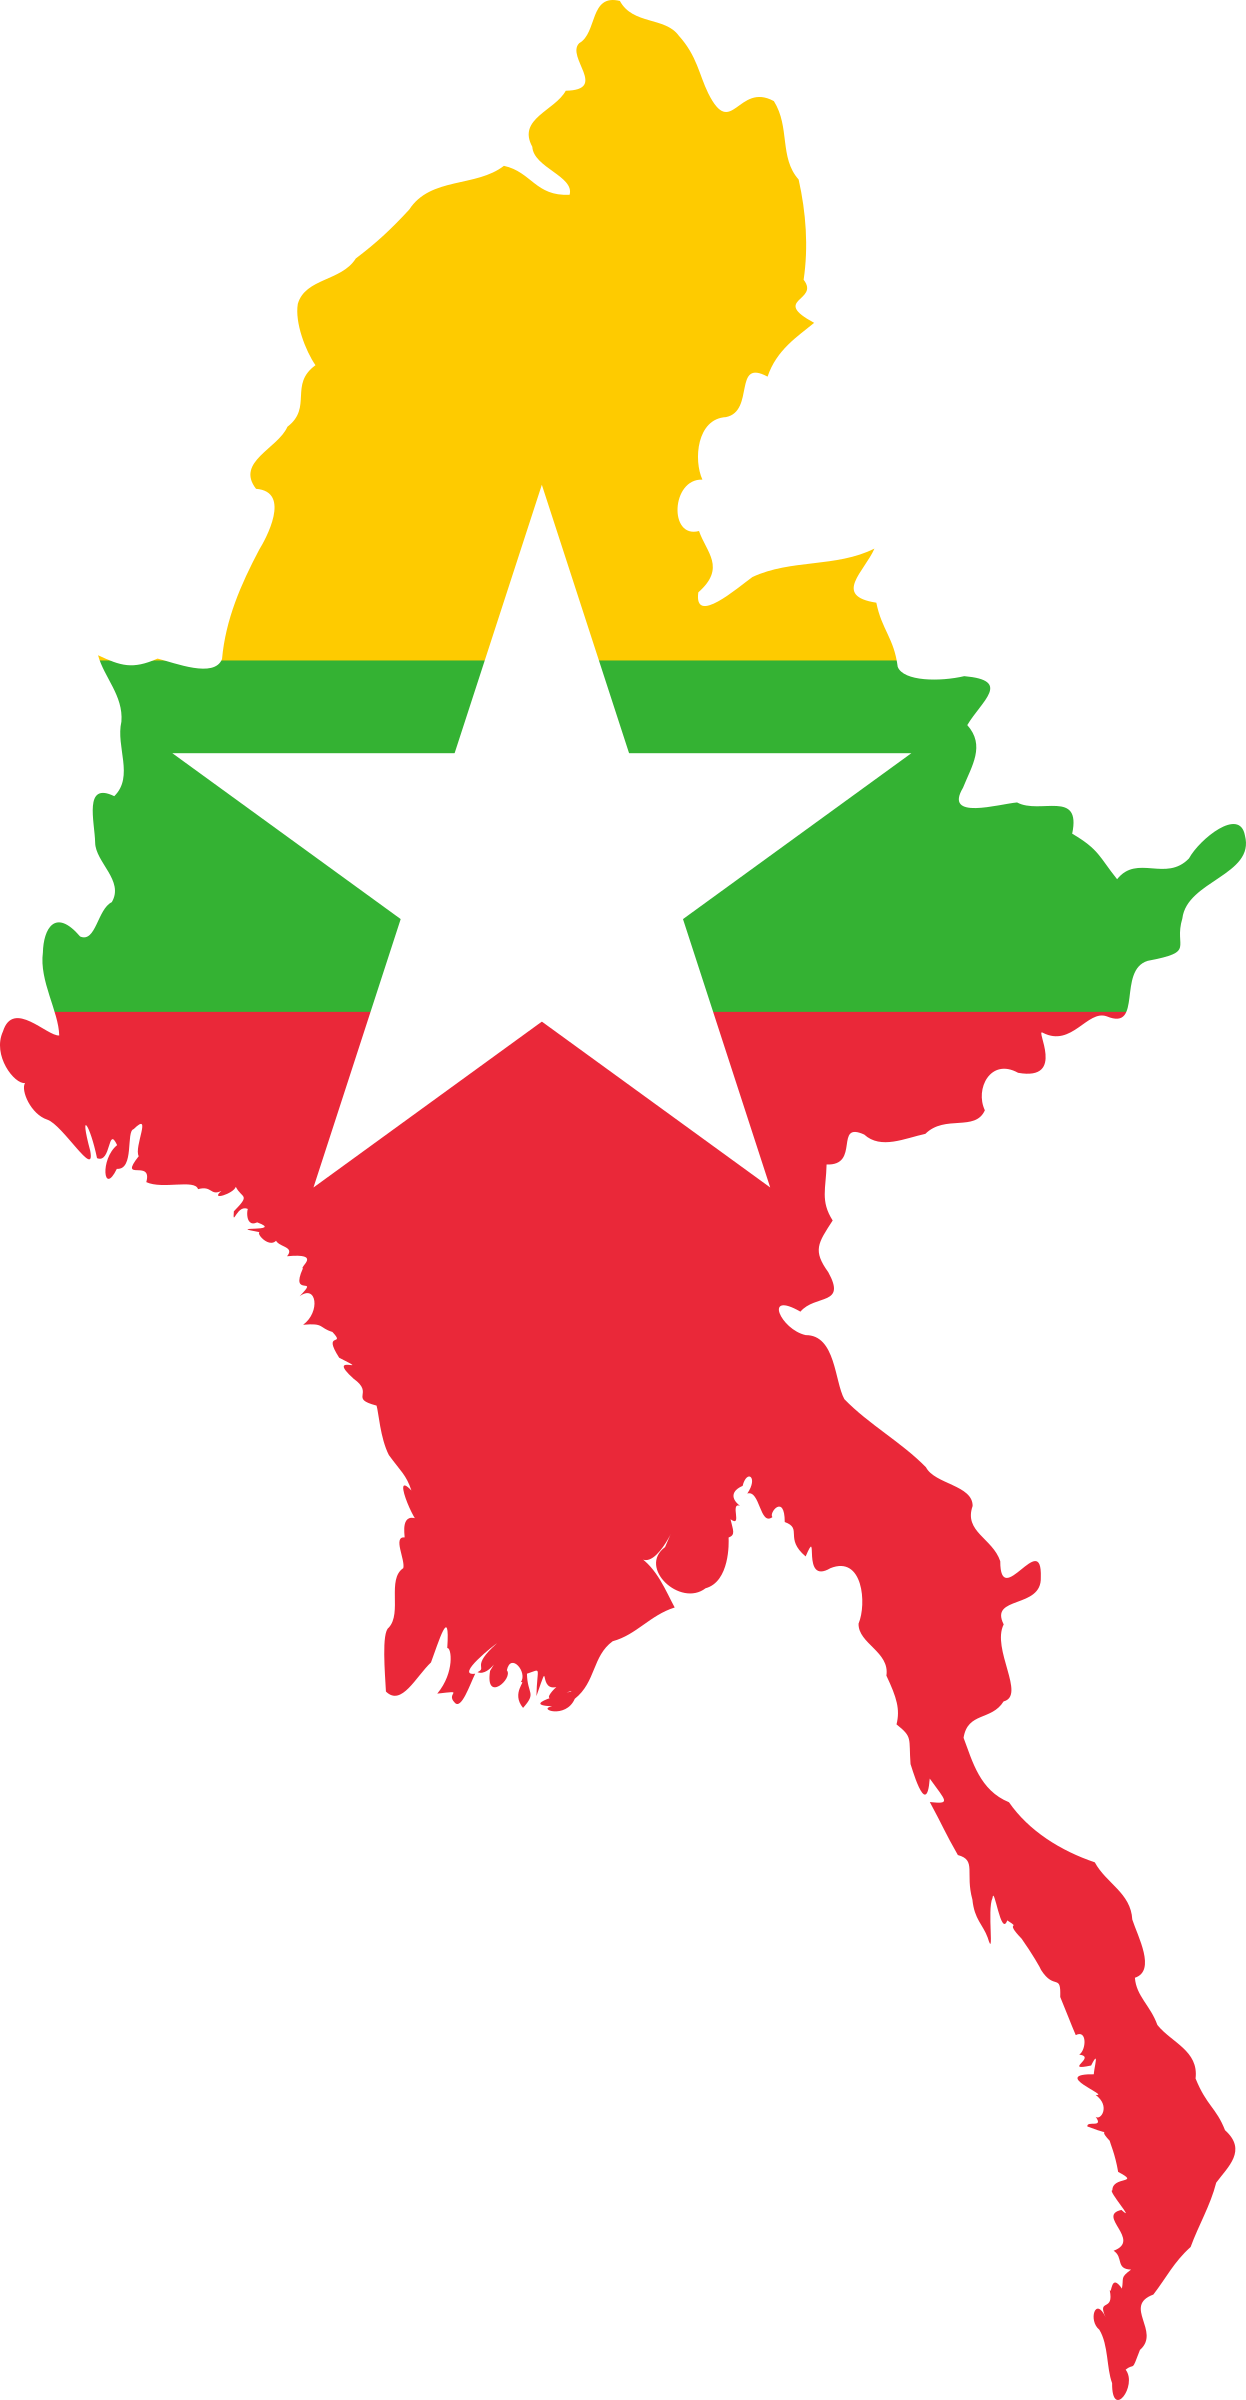 PNG. Myanmar flag icon - free